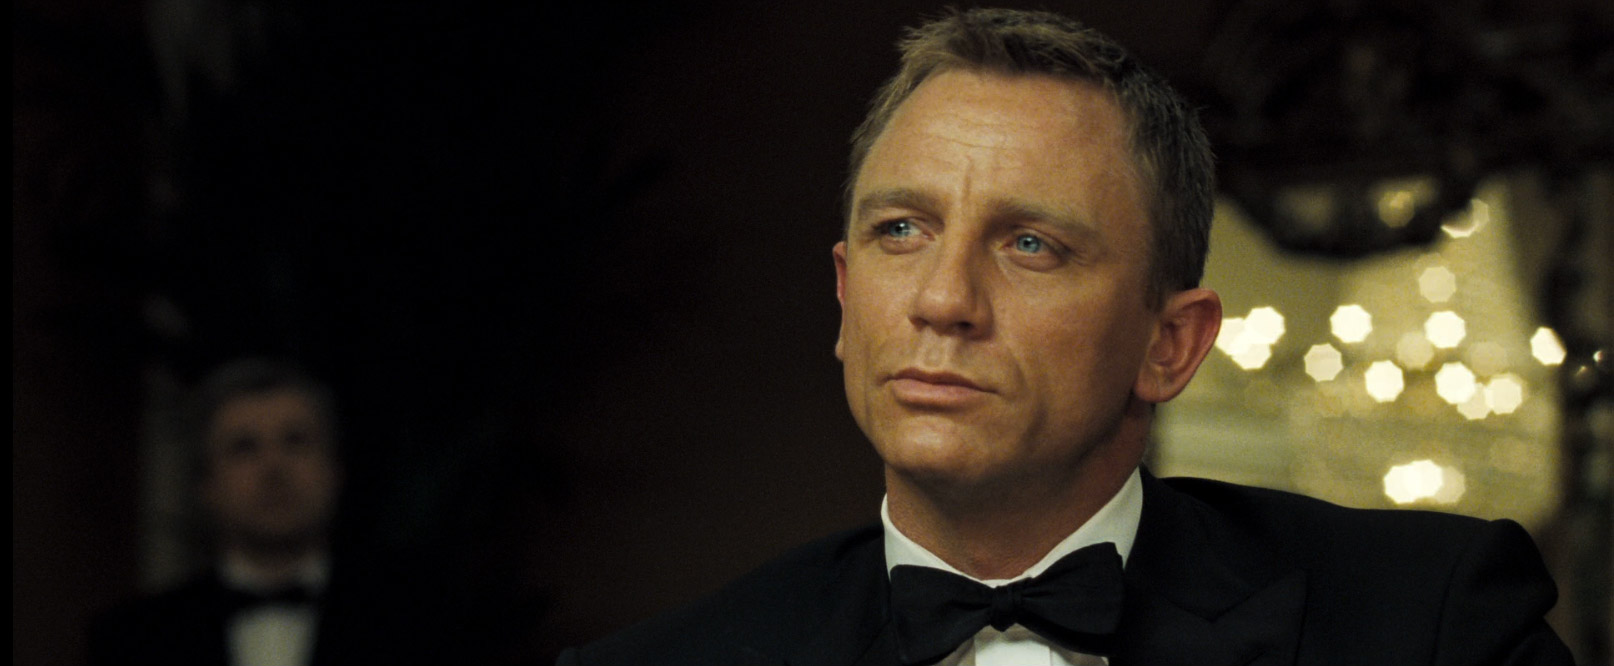 007 casino royale trama film